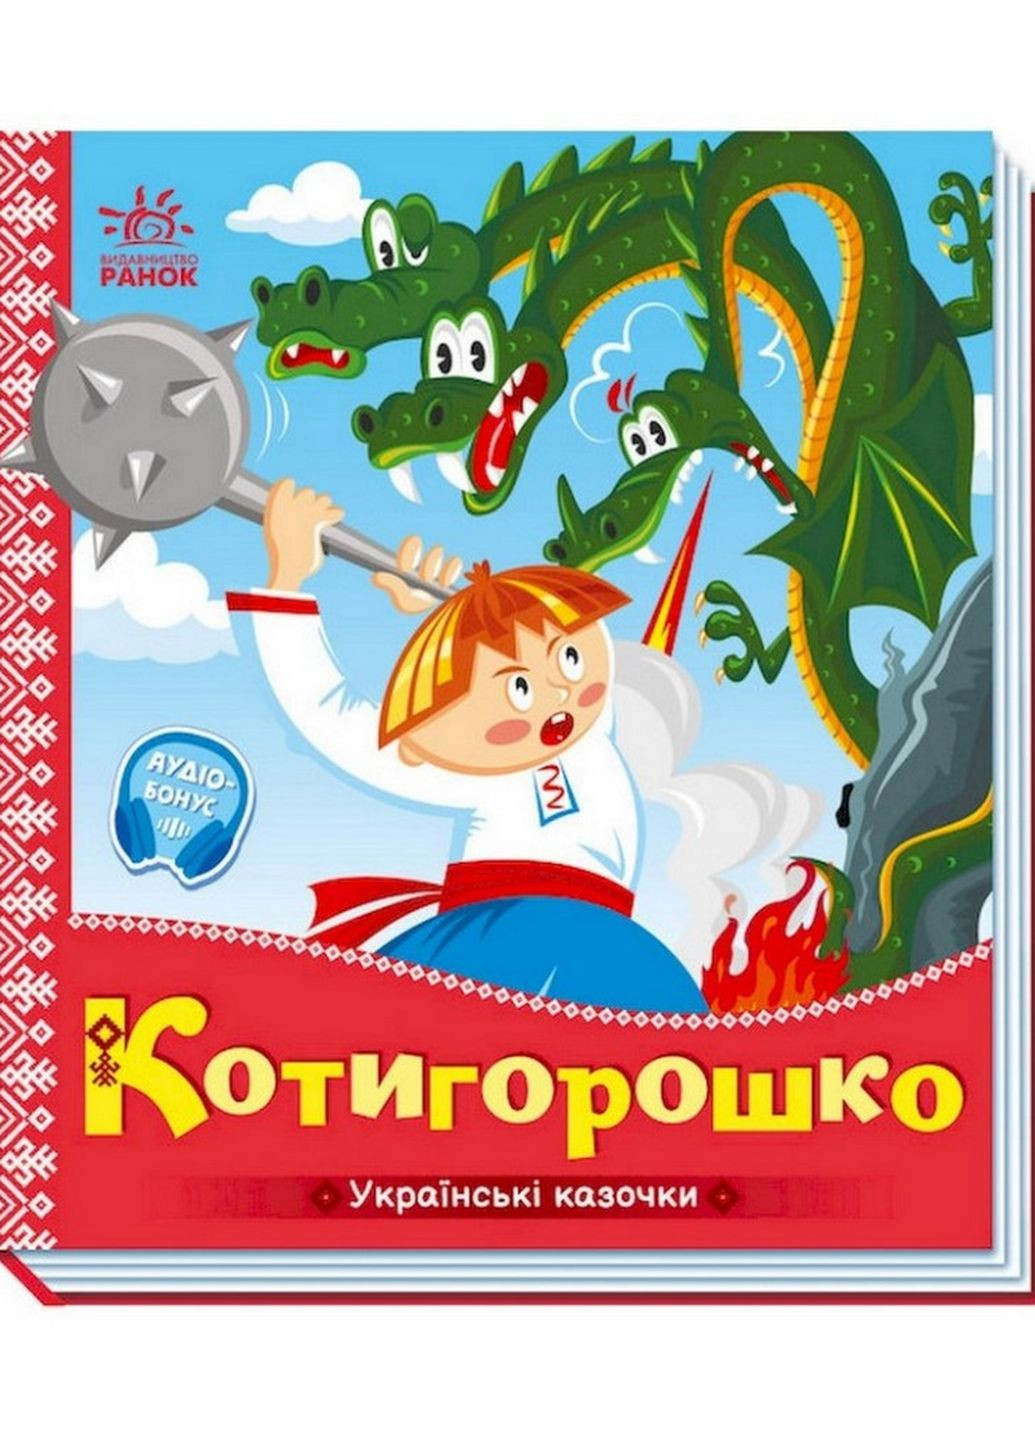 Украинские сказочки Котигорошко Ранок 1722005 аудио-бонус Ranok Creative (276776484)